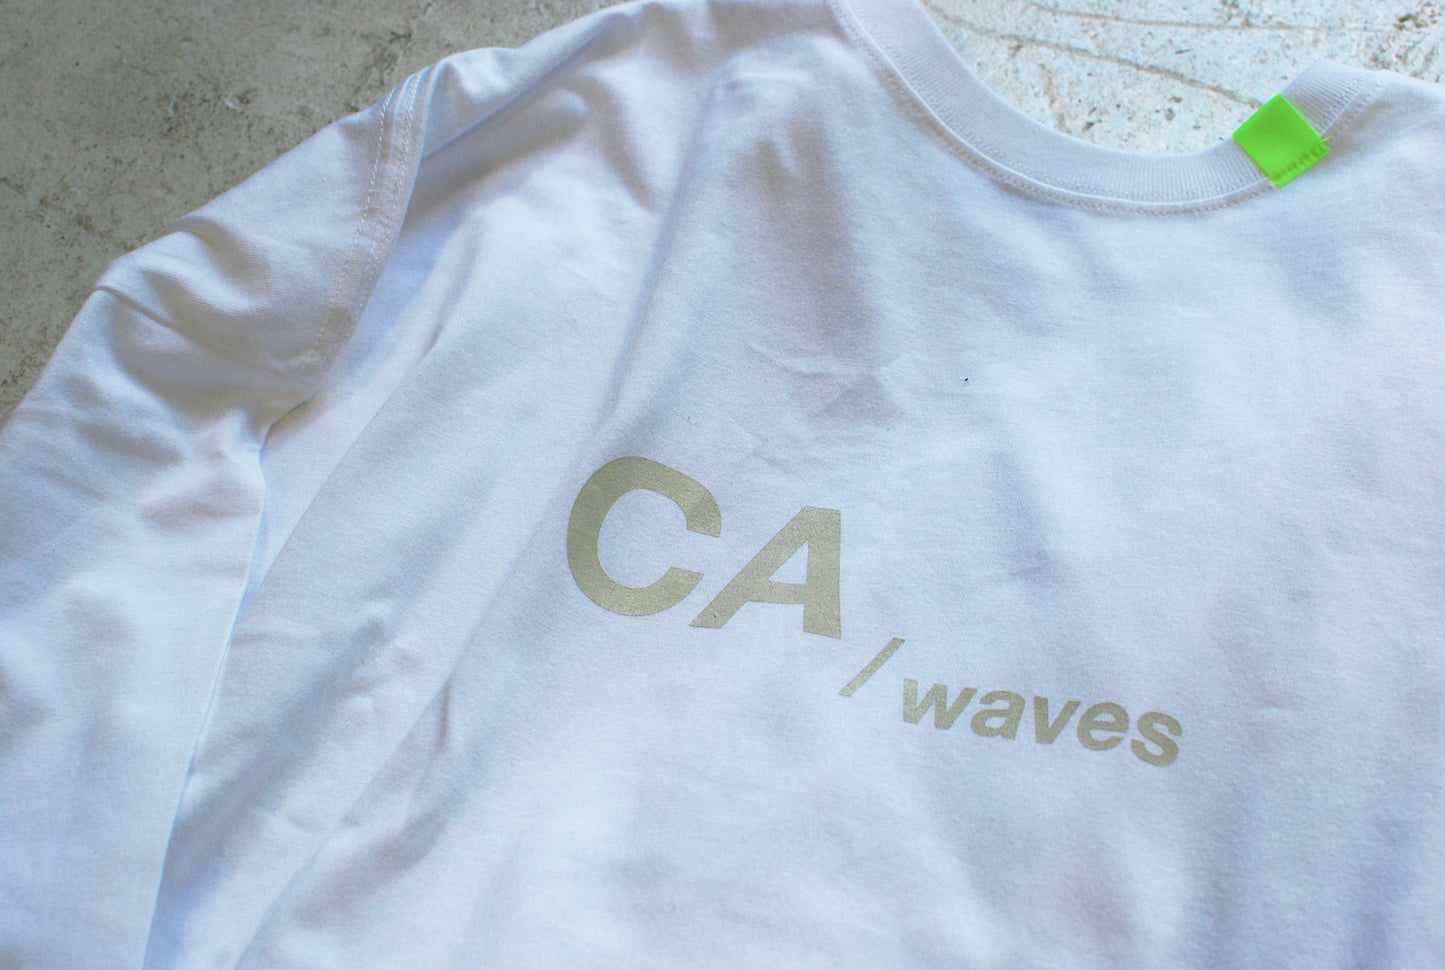 CA/waves LS Tee